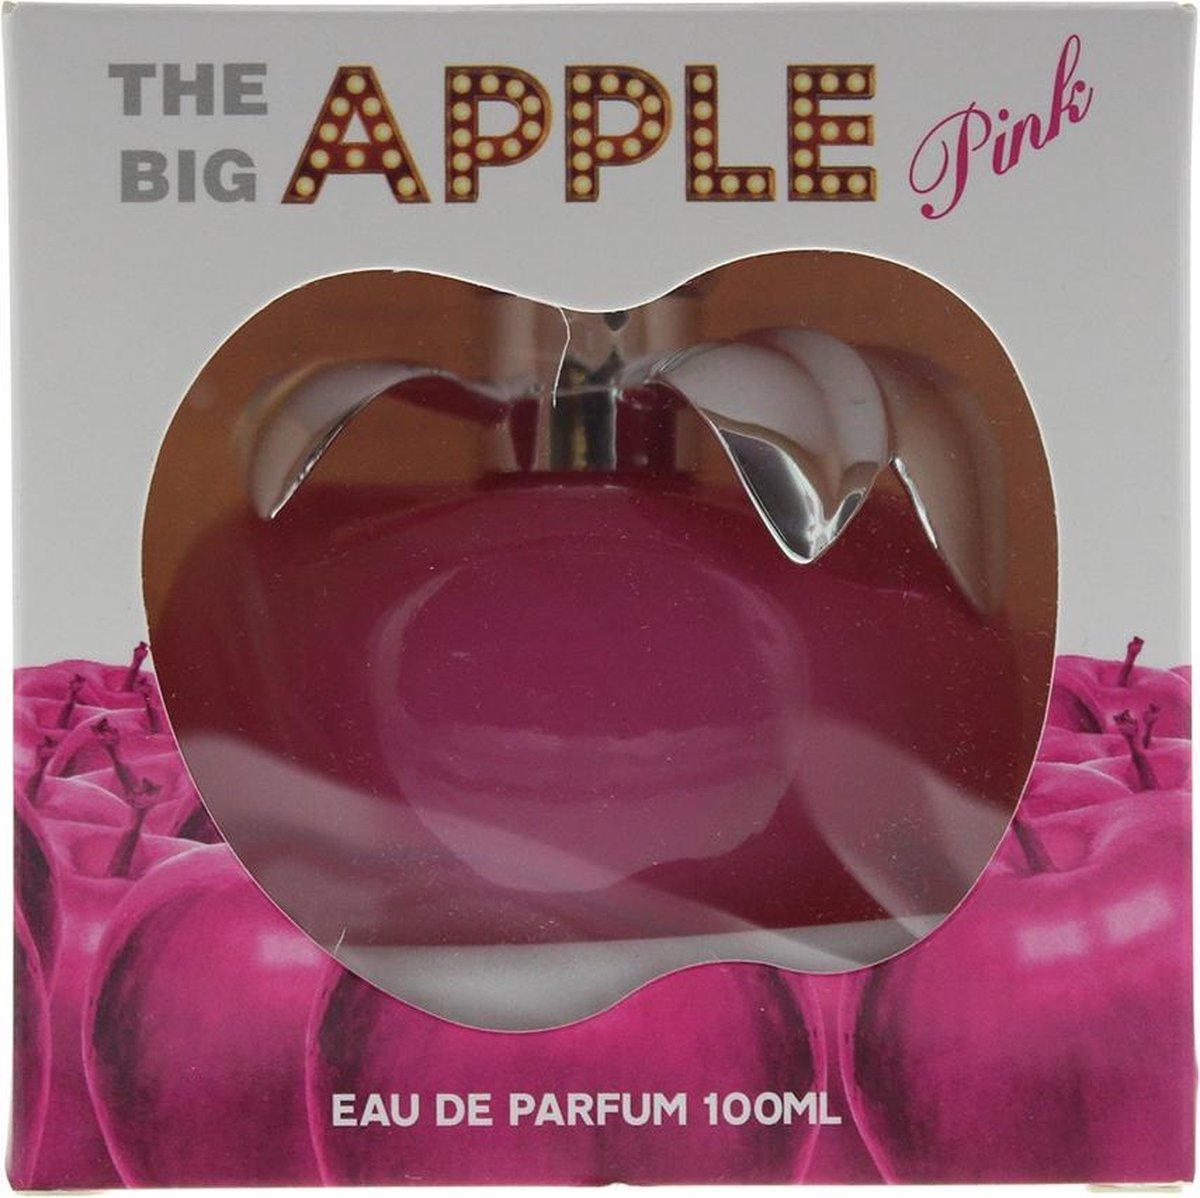 The Big Apple Pink Apple Eau de Parfum 100ml Spray